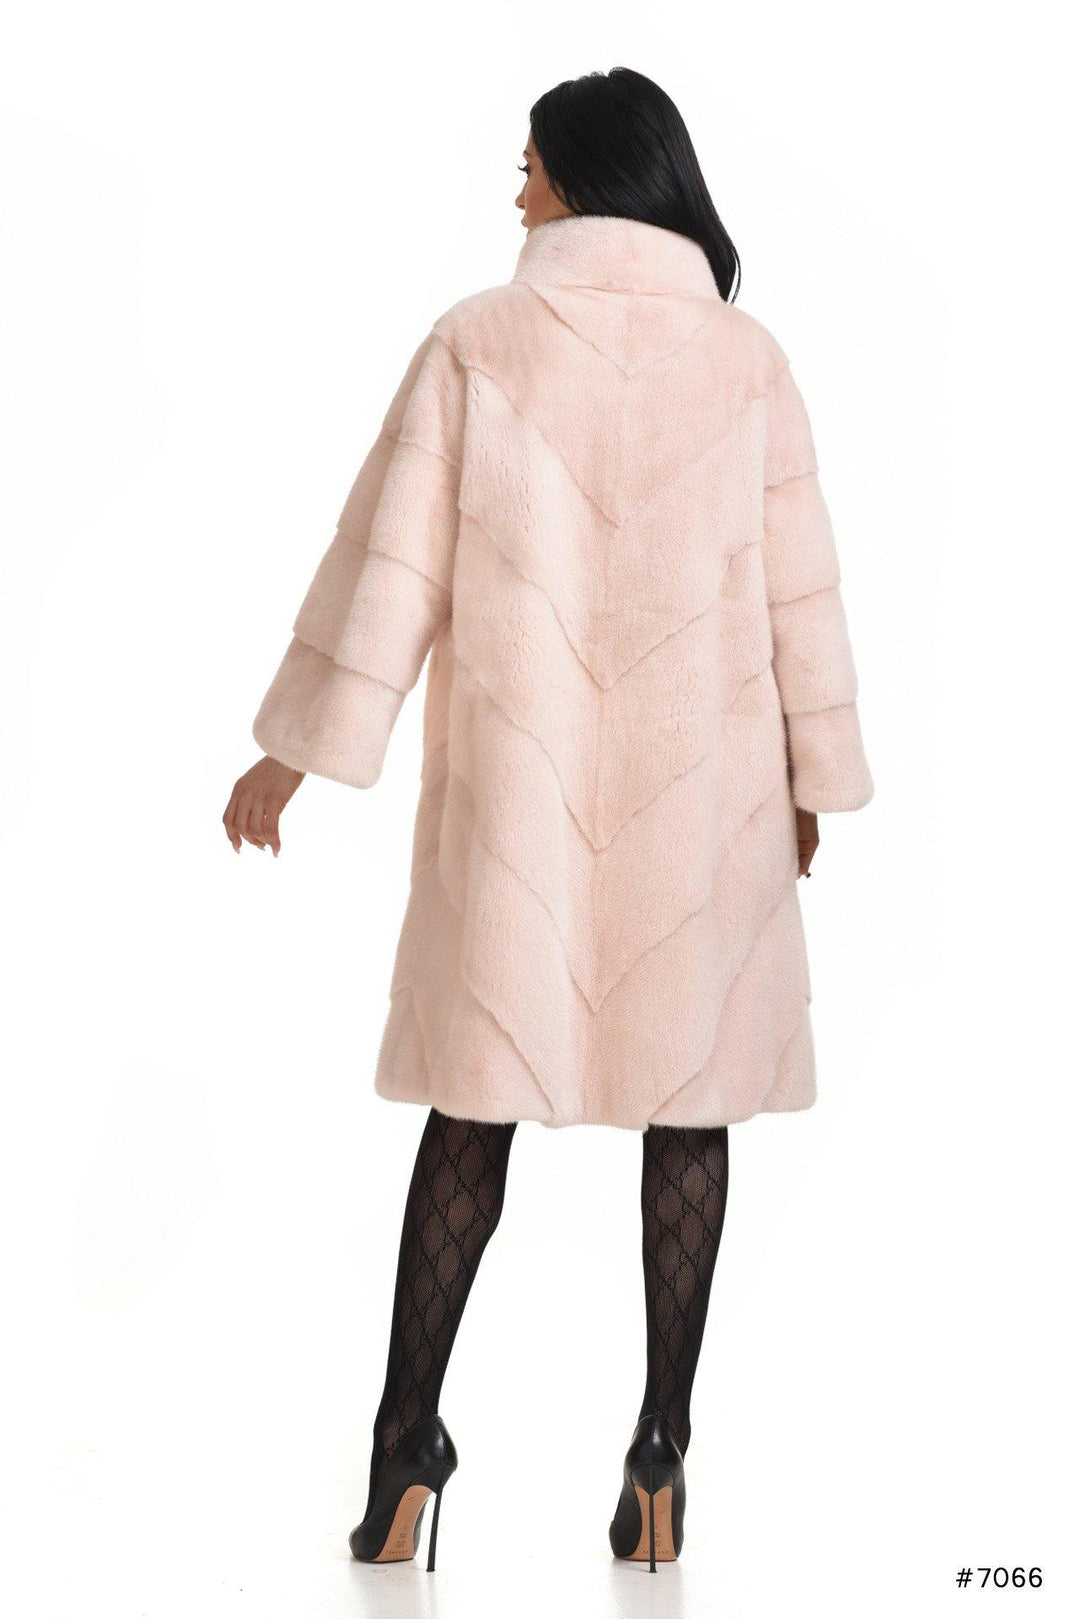 Classy mink coat with stand up collar - Manakas Frankfurt